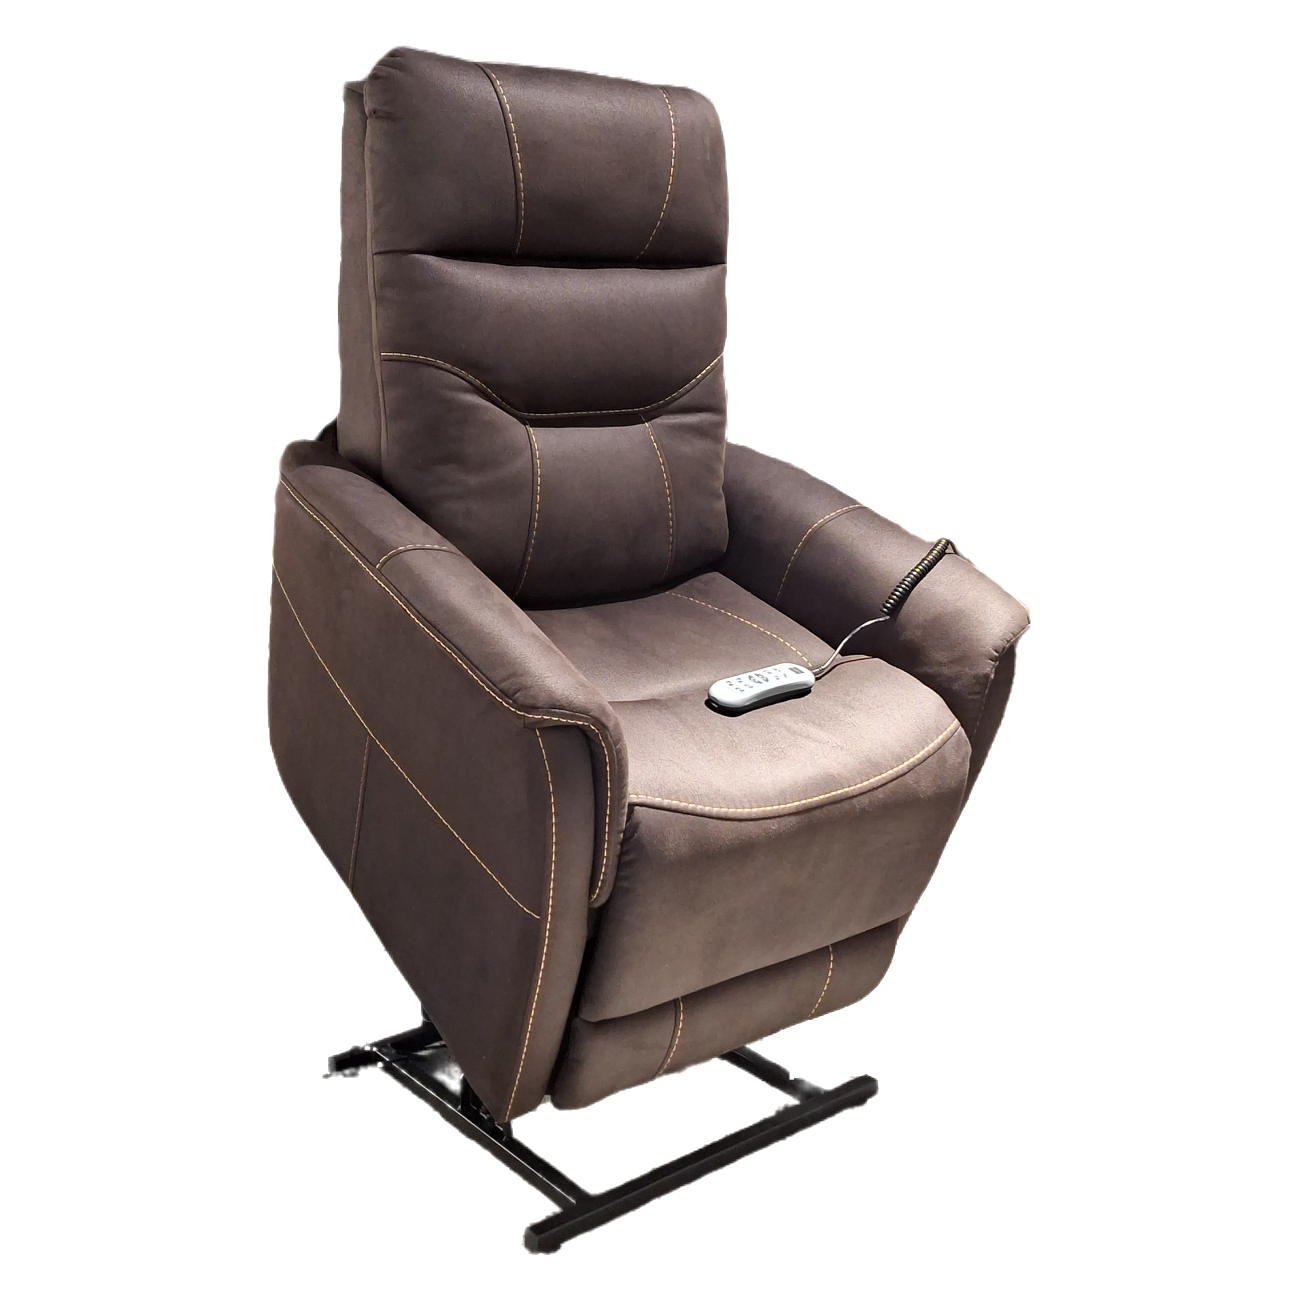 Ez Swivel Seat Cushion - mobilityjoy